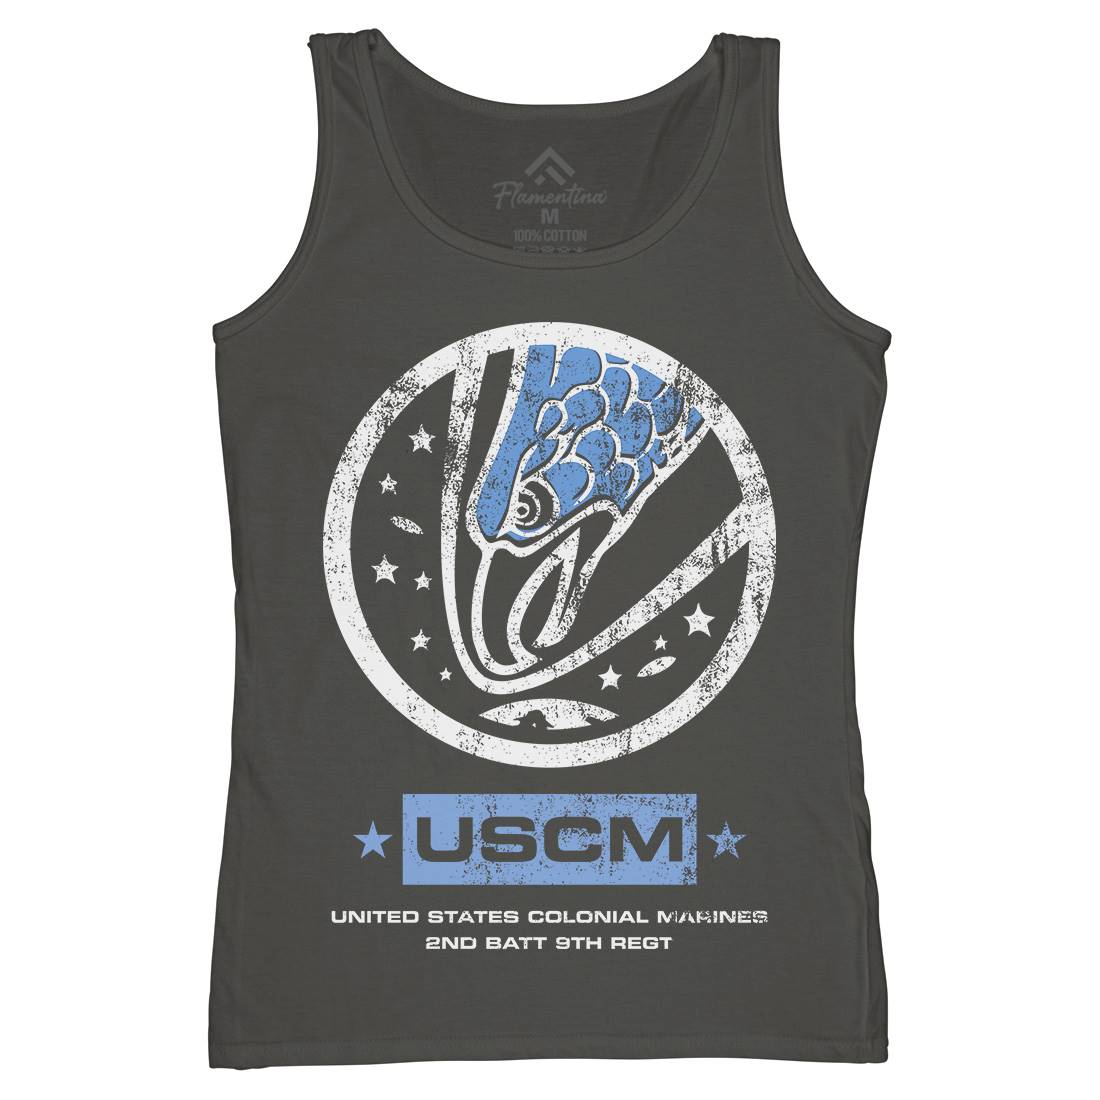 Uscm Womens Organic Tank Top Vest Space D135